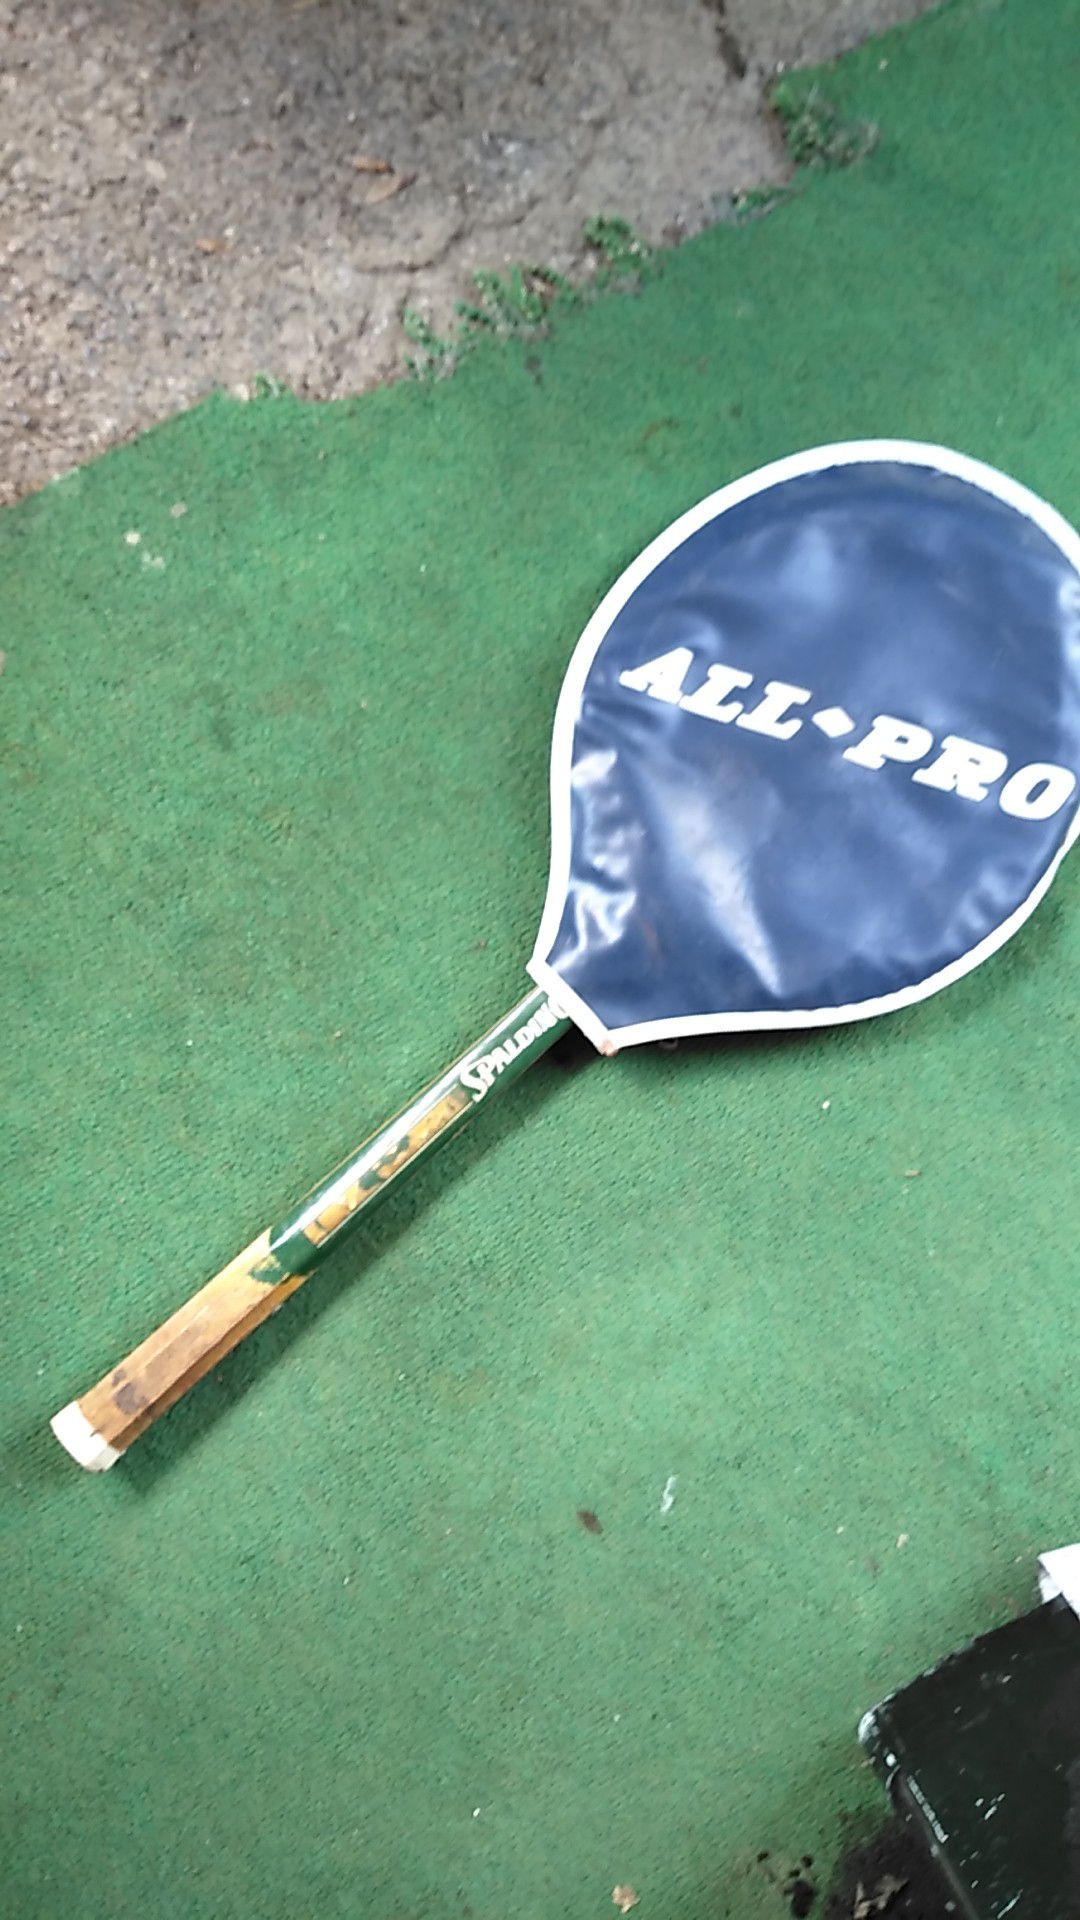 Spalding impact 222 wooden tennis racket